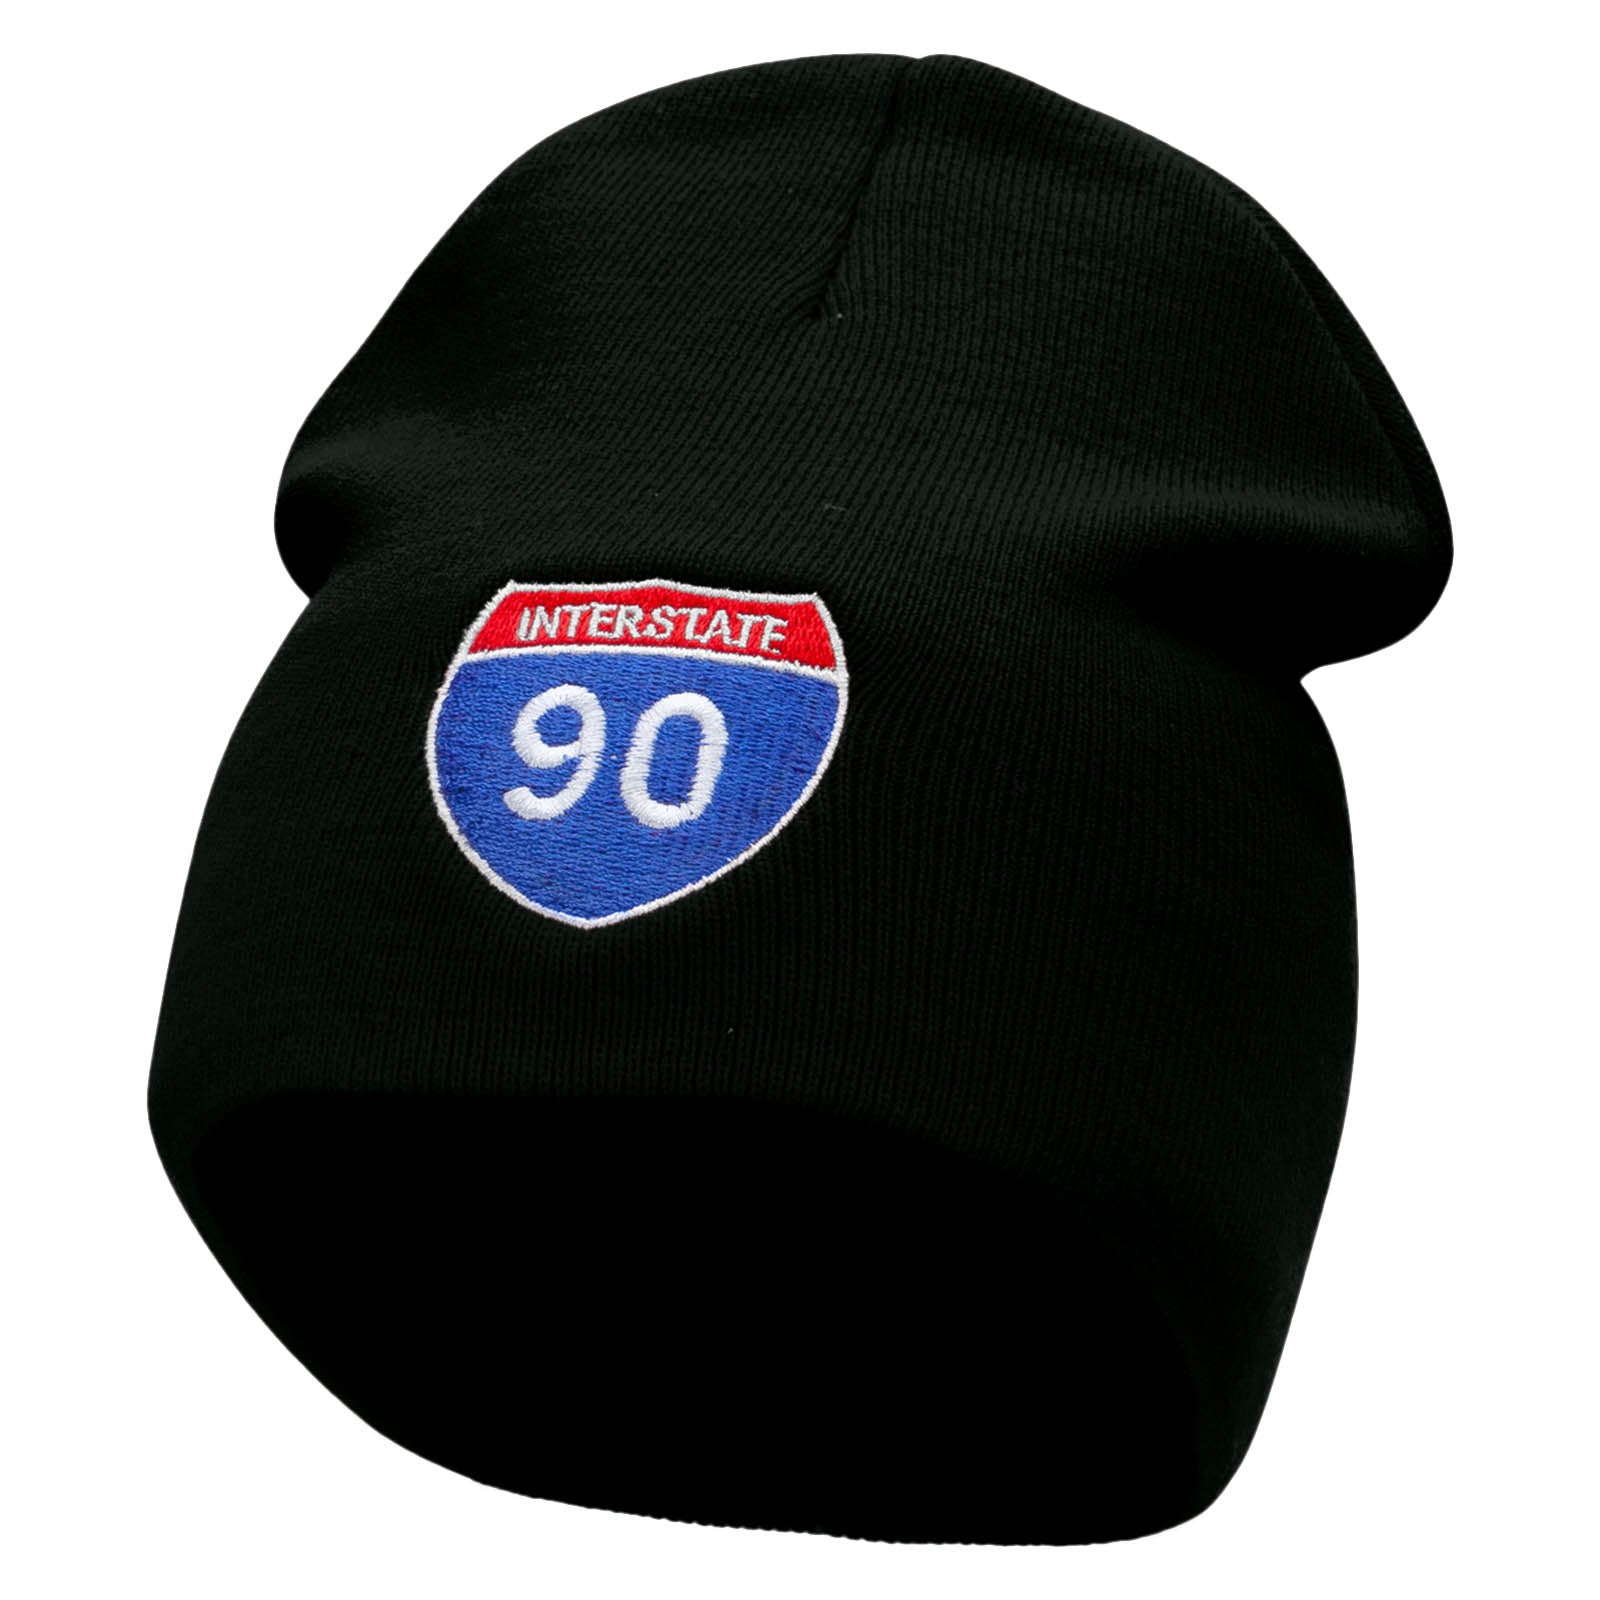 Interstate Freeway 90 Embroidered 8 Inch Short Beanie - Black OSFM